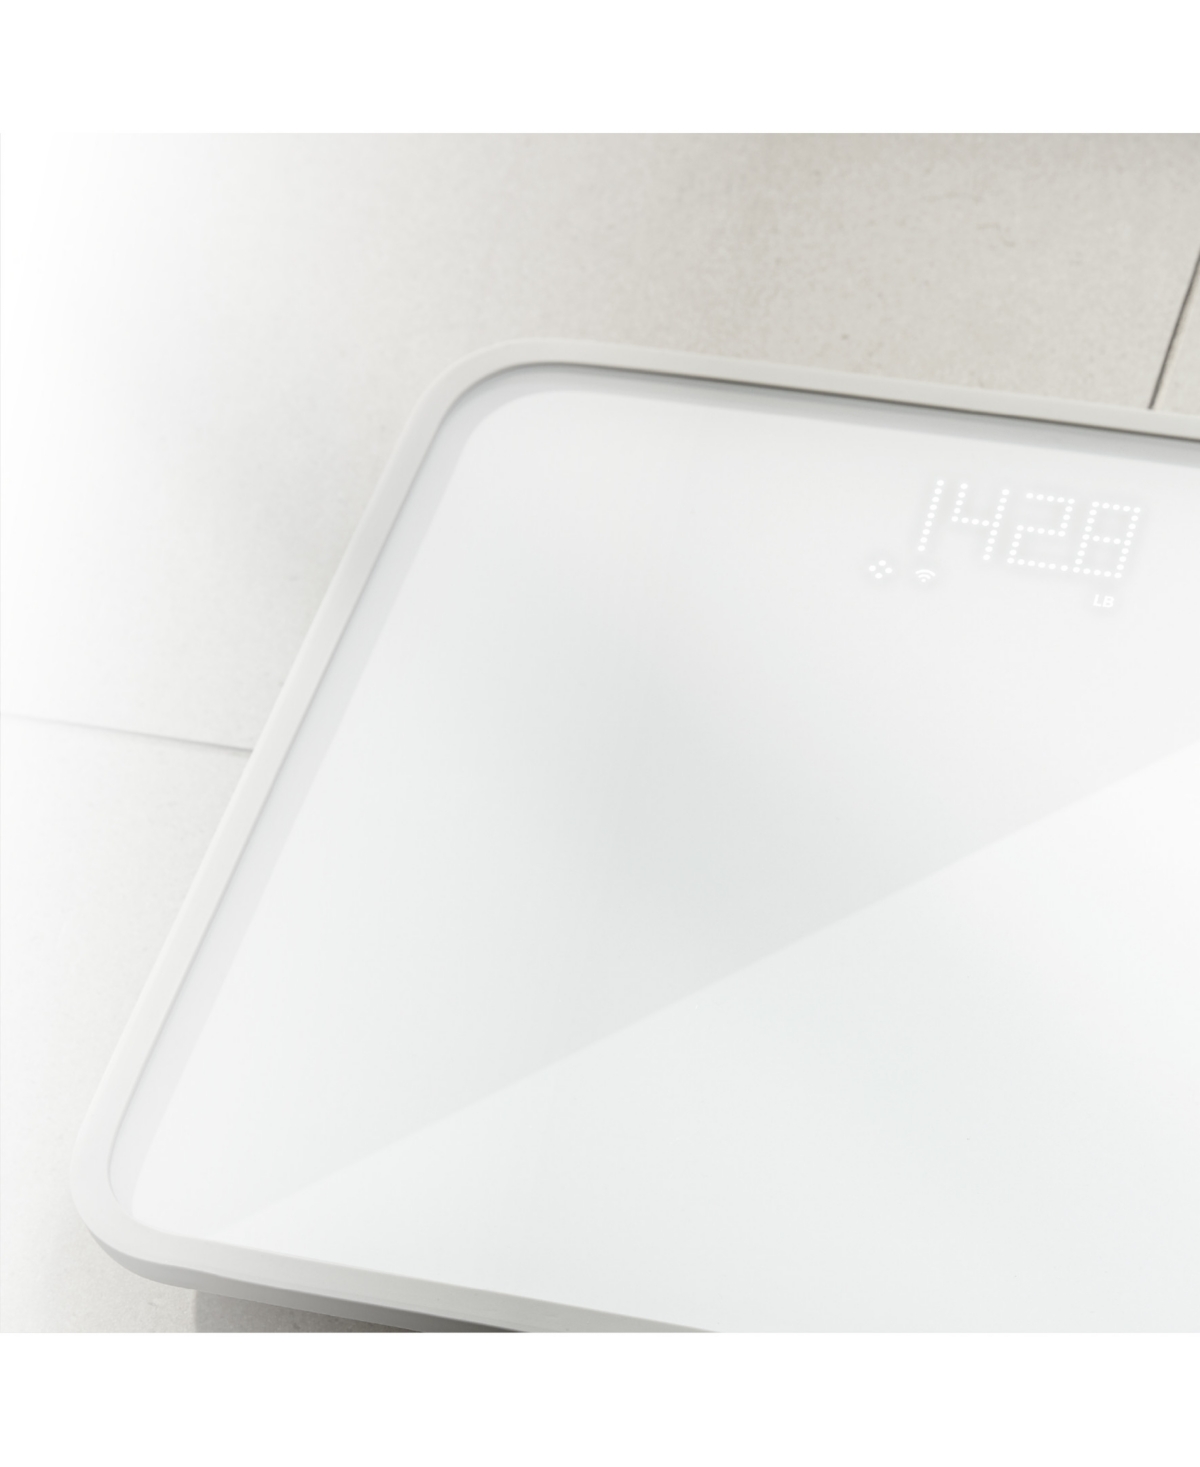 Shop Sharper Image Spastudio Digital Wifi Smart Scale In White